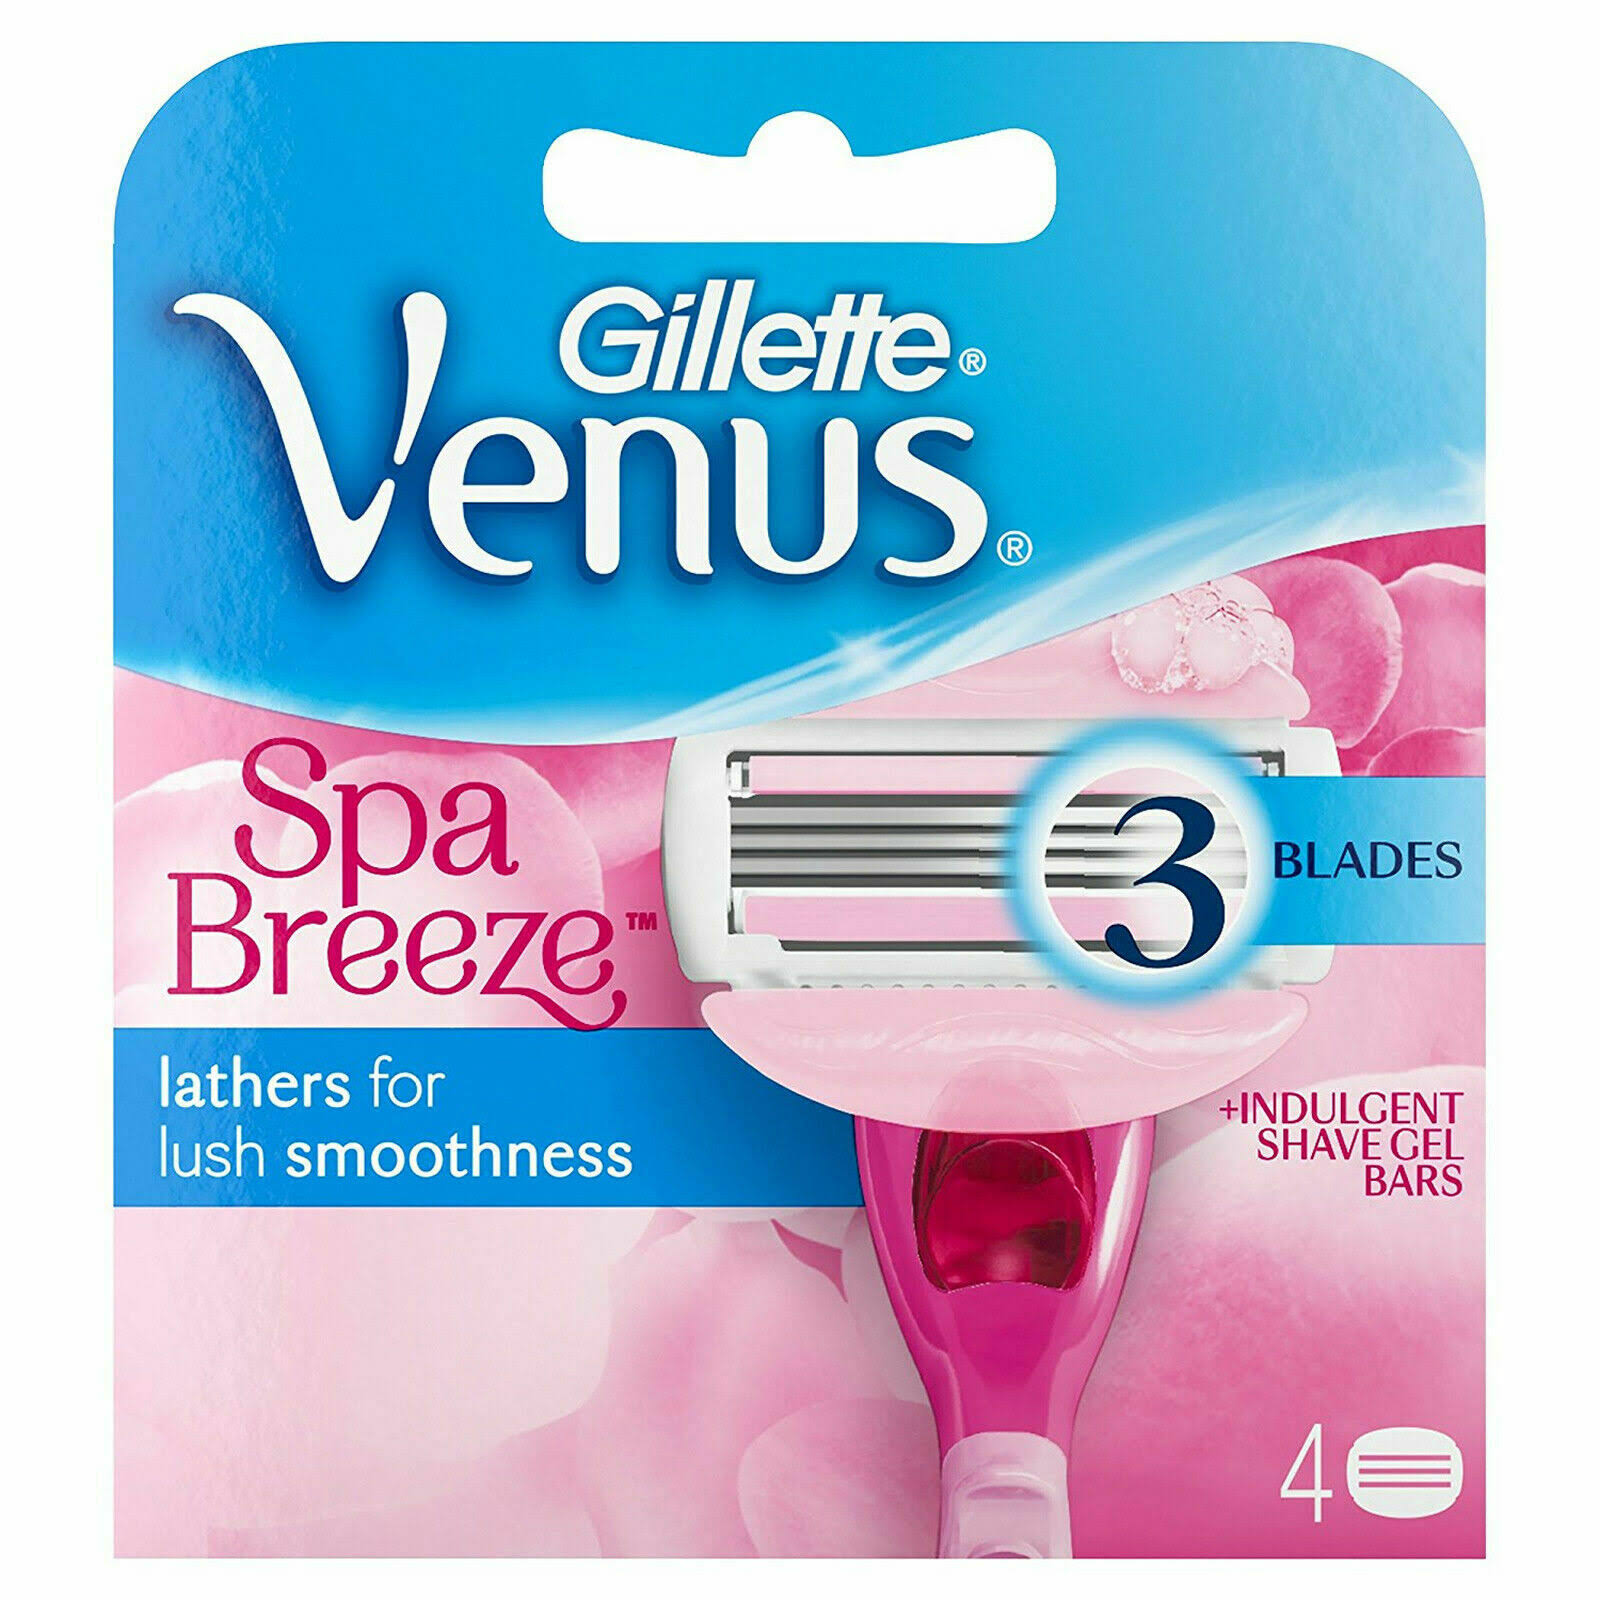 Gillette Venus Comfortglide Spa Breeze Women's Razor Blades - Pink, 4 Count